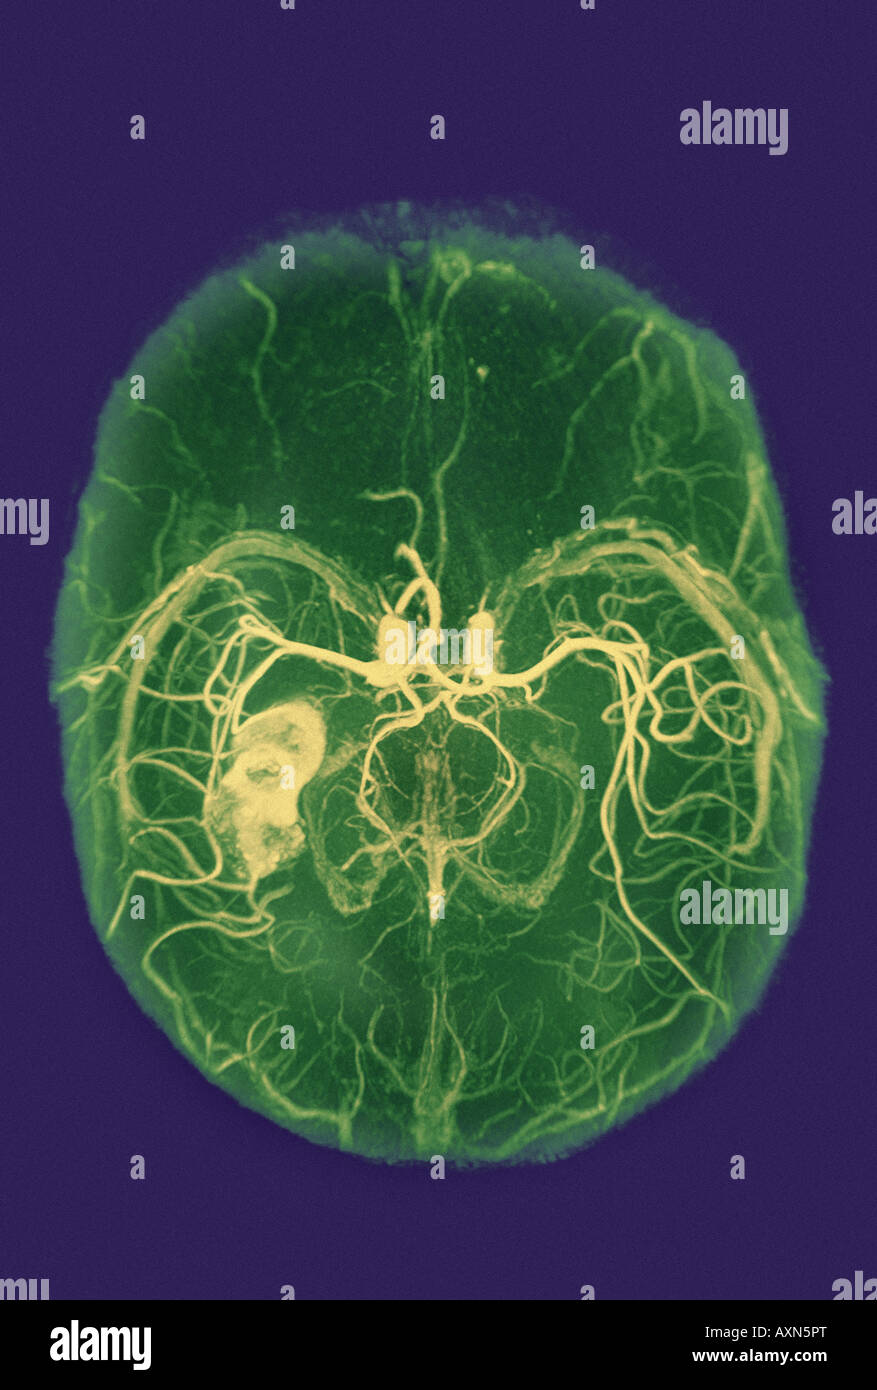 x ray of brain showing hemorrhage blood clot brain attack Stock Photo